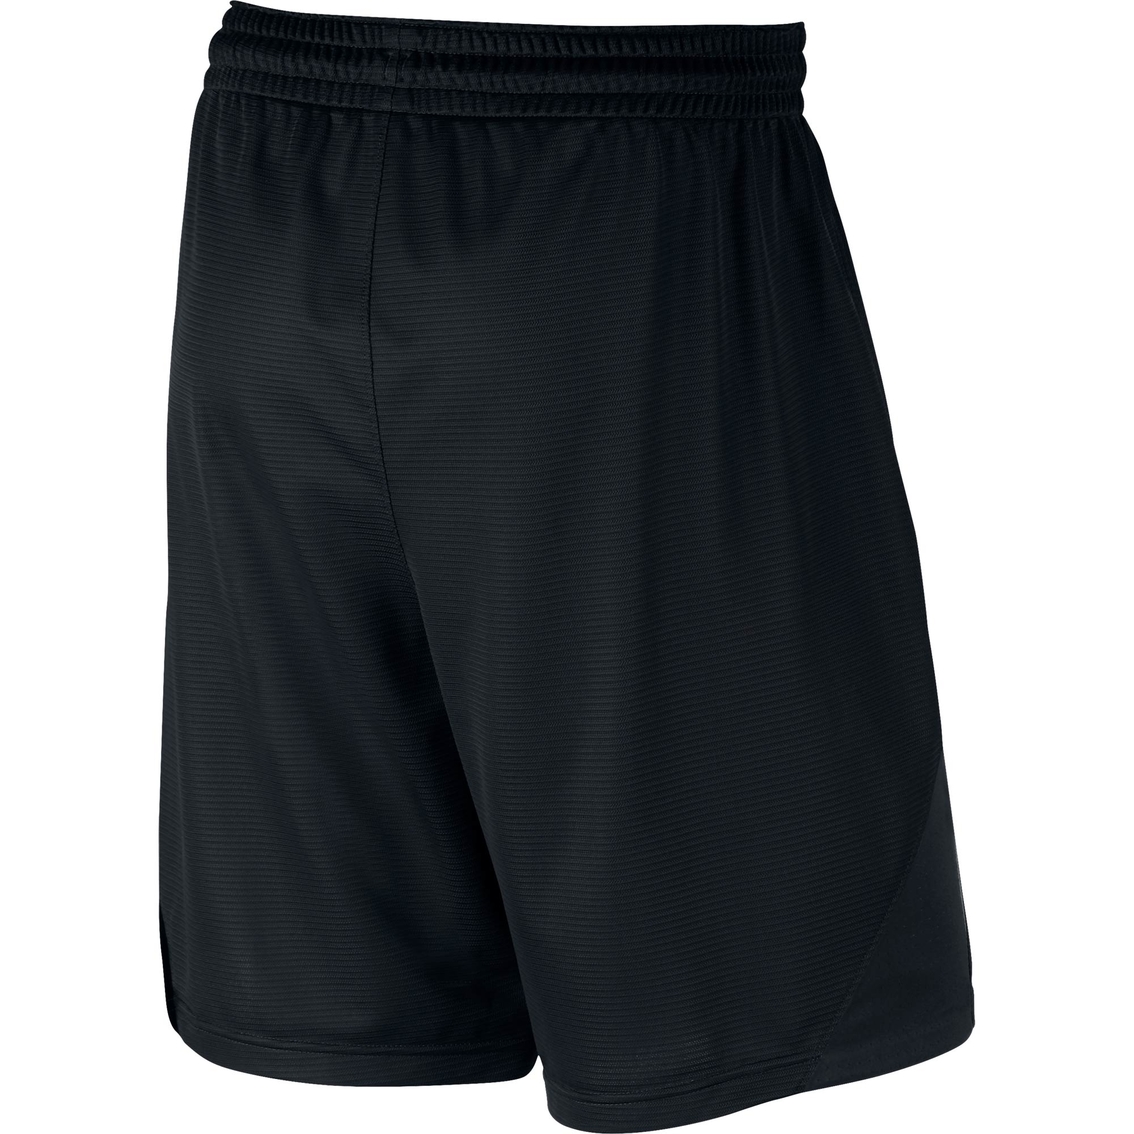 Nike Men's Fastbreak Basketball Shorts | Shorts | Clothing ...